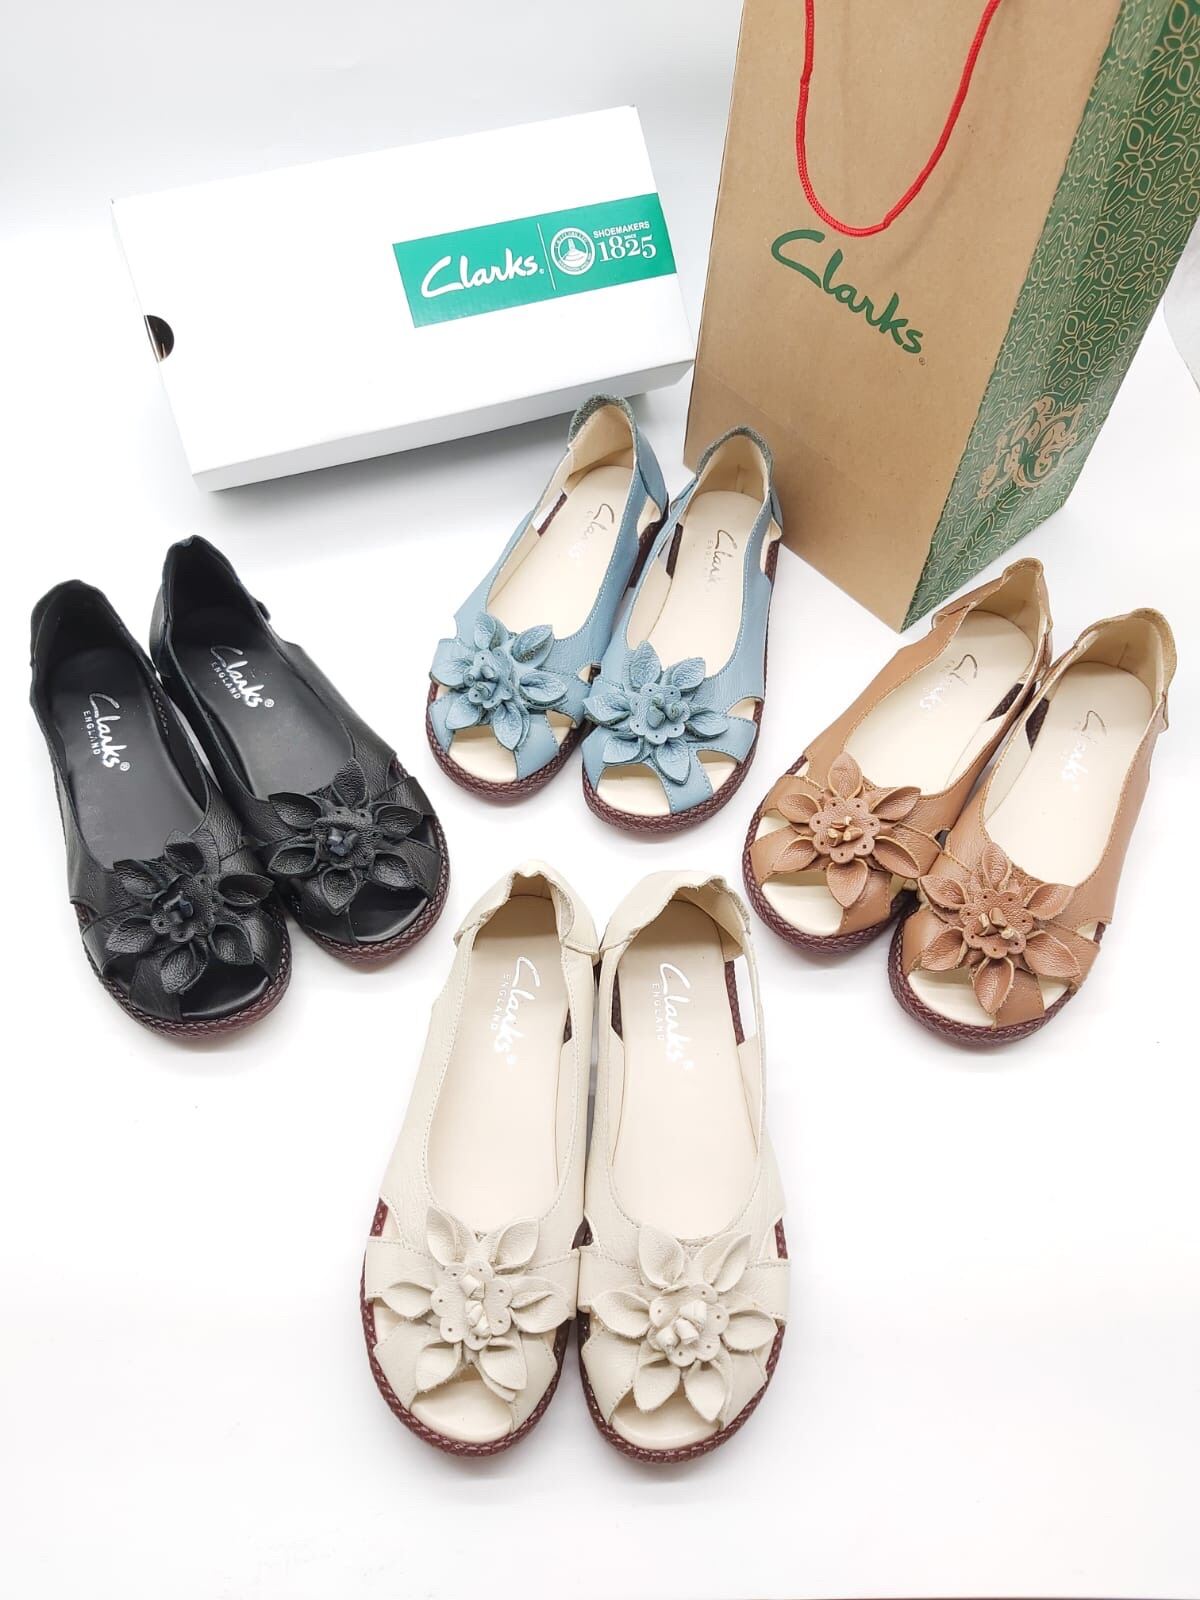 Clarks Sepatu Yc -1688-57 Flat Original | islamiyyat.com